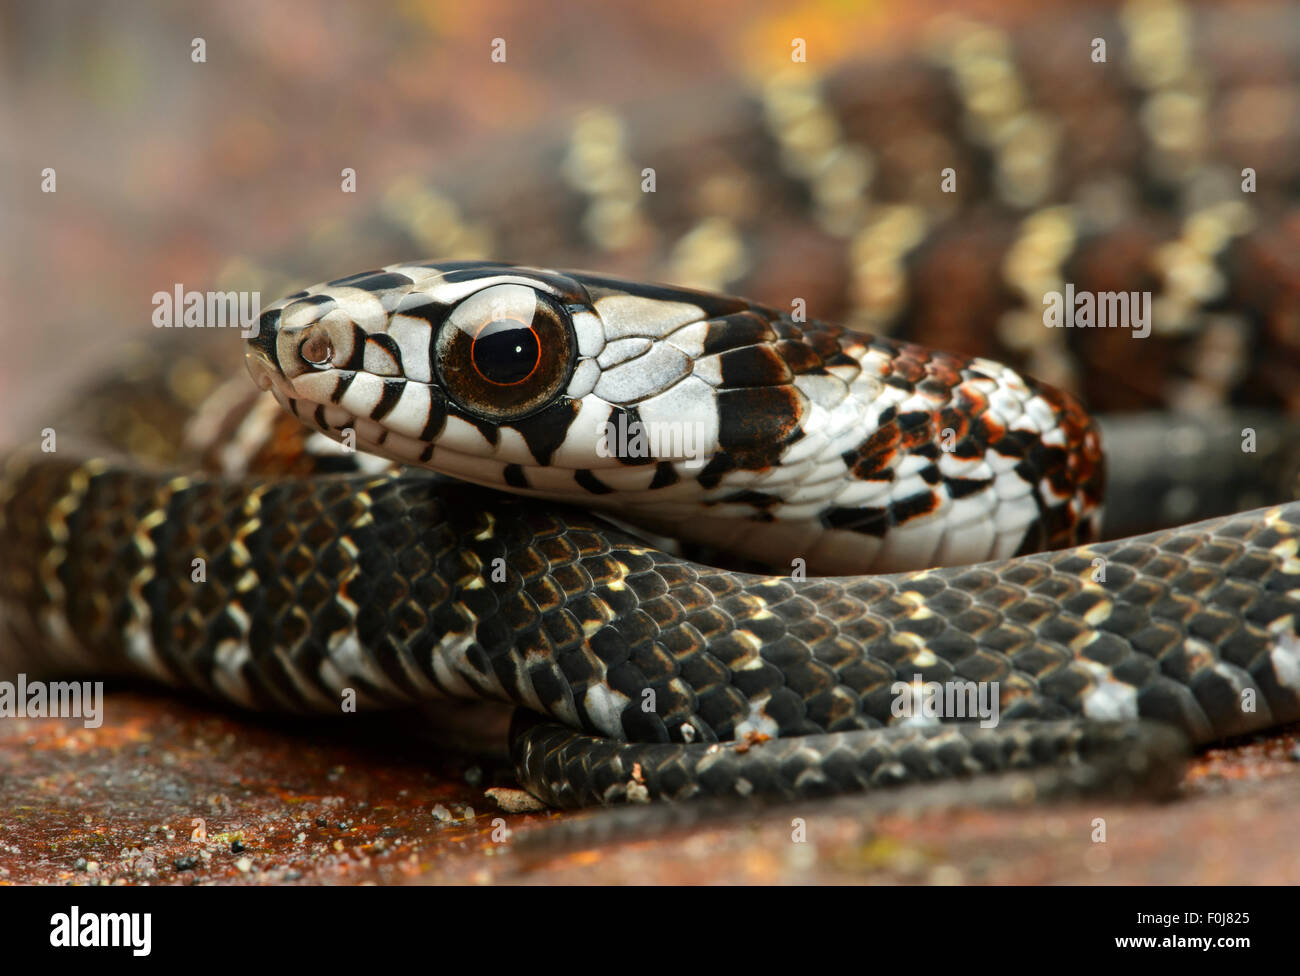 Tawny Forest Racer (Dendrophidion dendrophis), snake (Colubridae), Amazon rainforest, Yasuni National Park, Ecuador Stock Photo